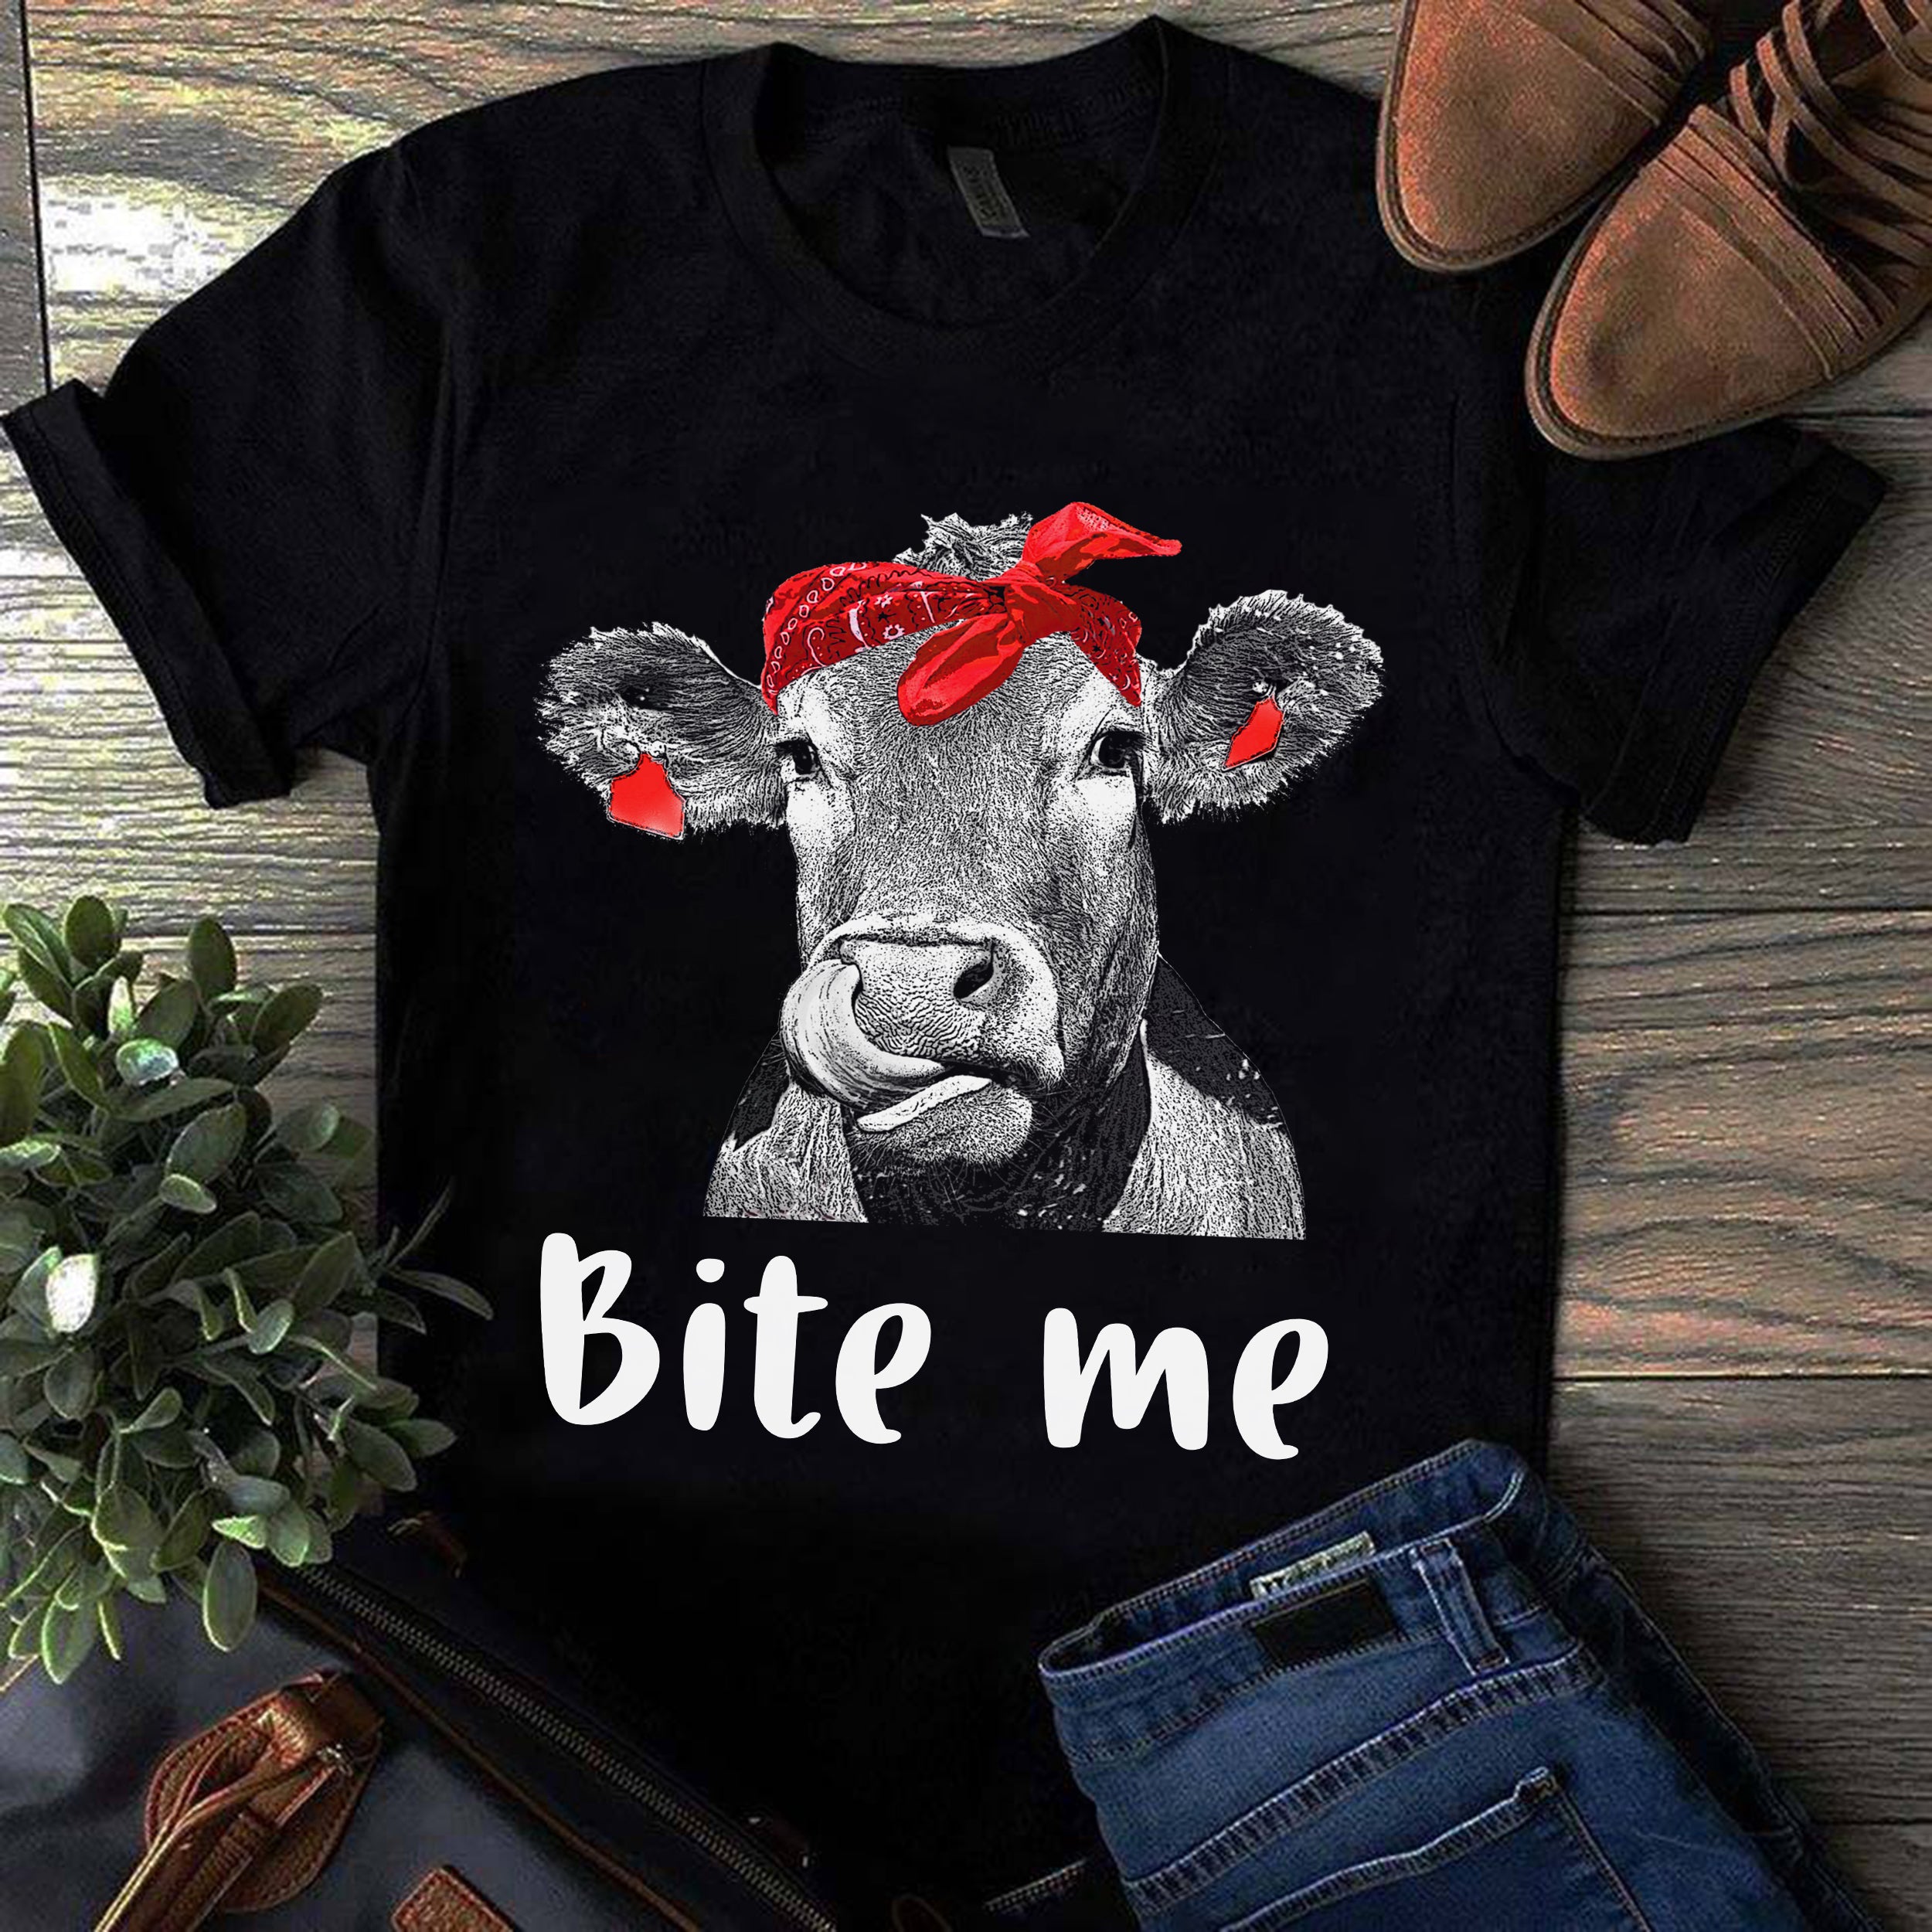 Bite Me Shirt, Cow Heifer Shirt, Heifer Shirt, Cow Cattle Shirt, Funny Cow Shirt, Cow Farm Shirt, Animal Farm Shirt, T-Shirt, Tee